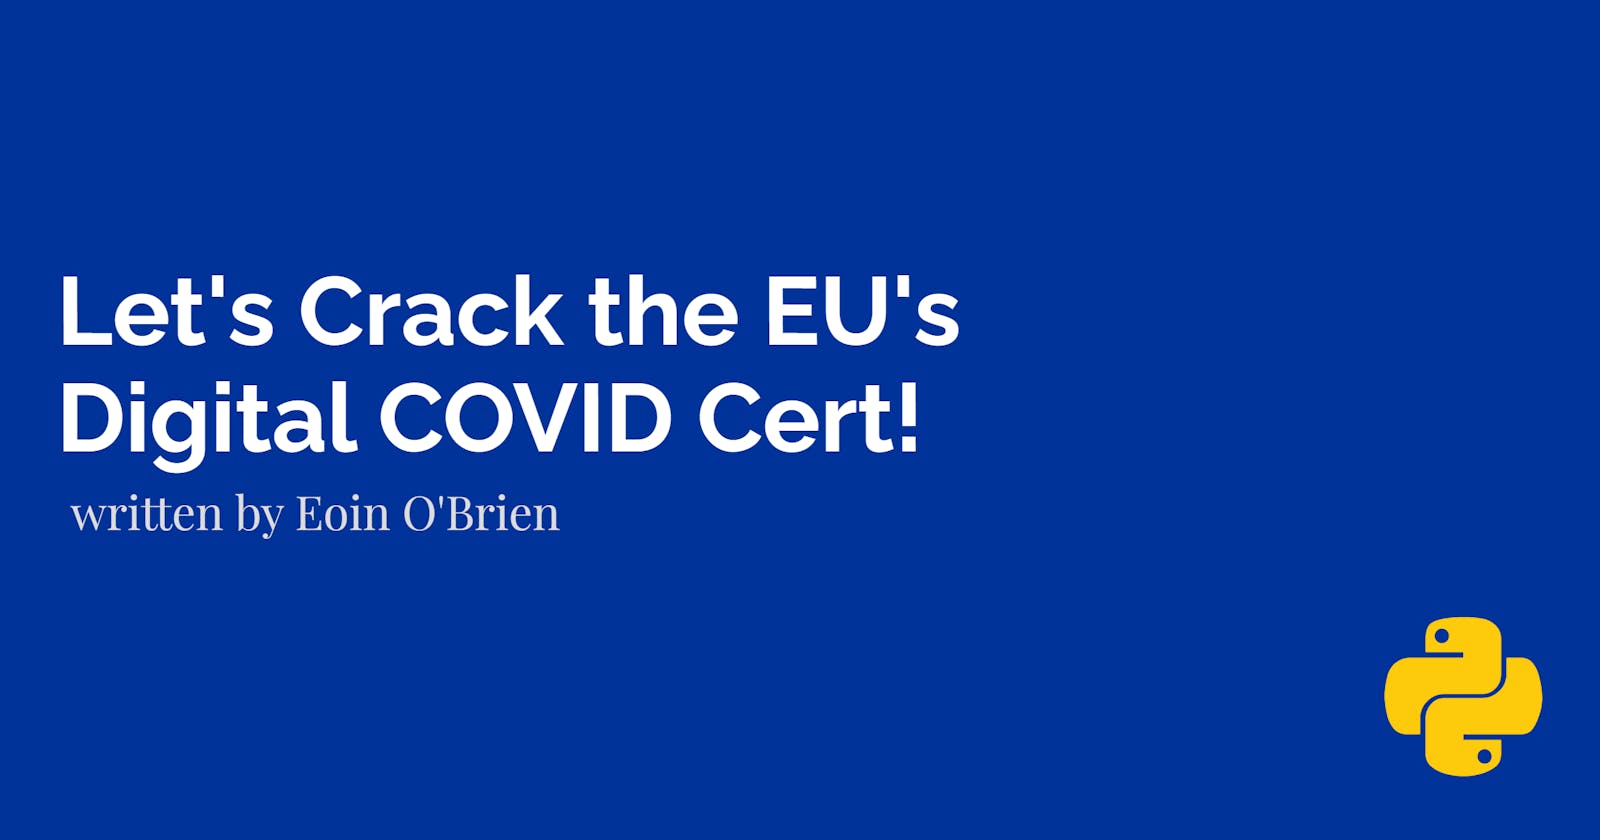 Let's Crack the EU's Digital COVID Cert!